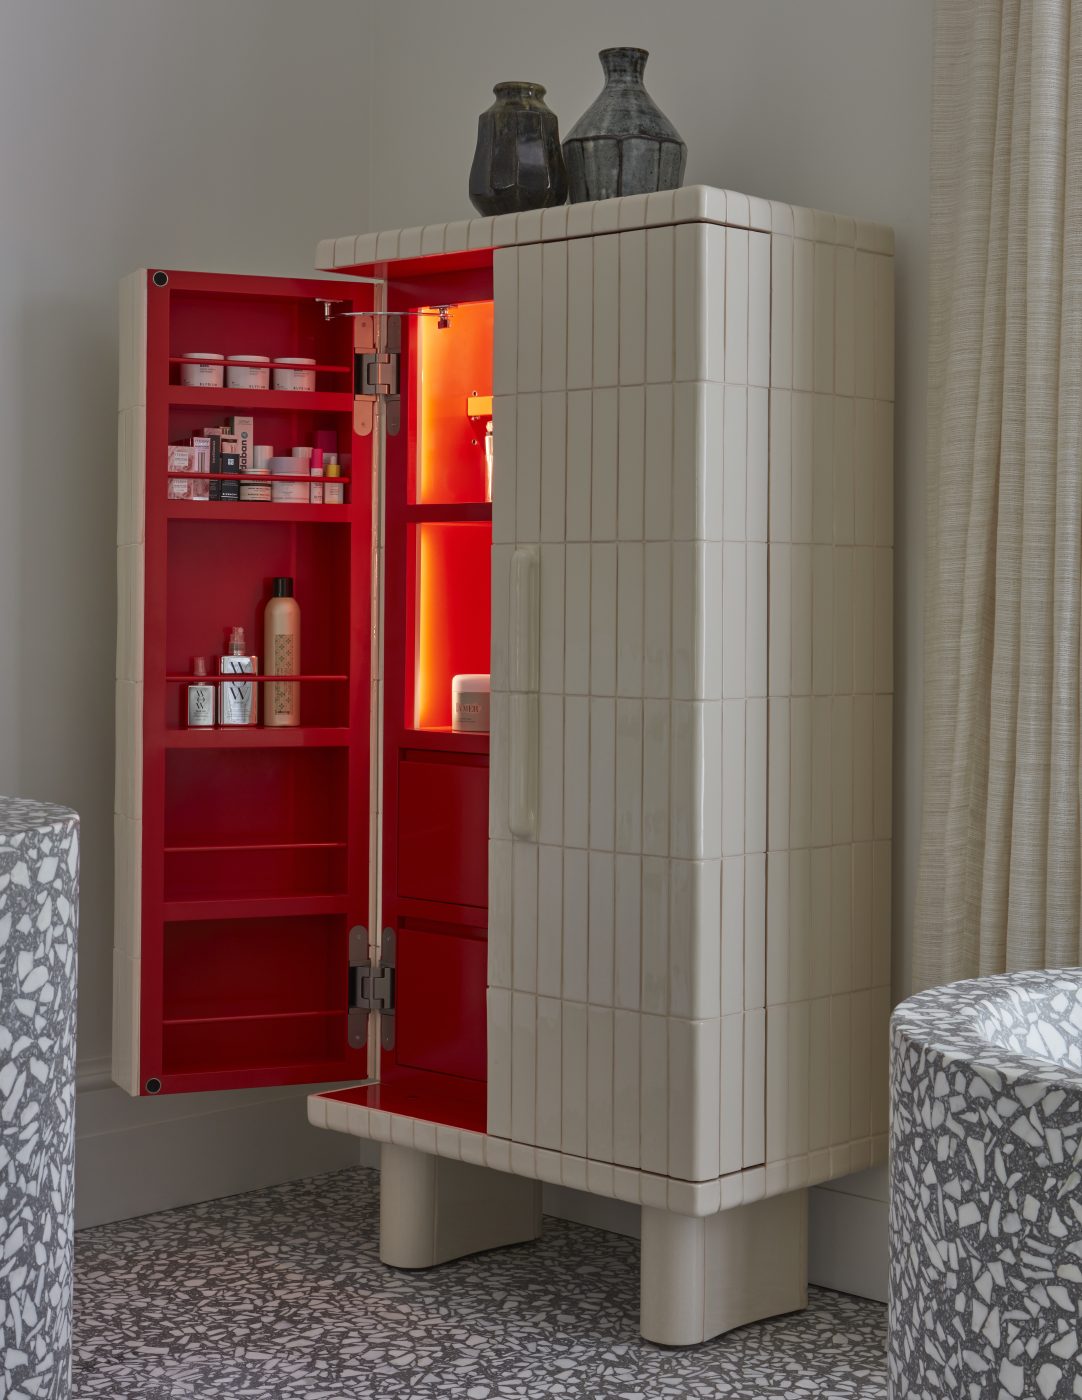 storage cabinet with red interior